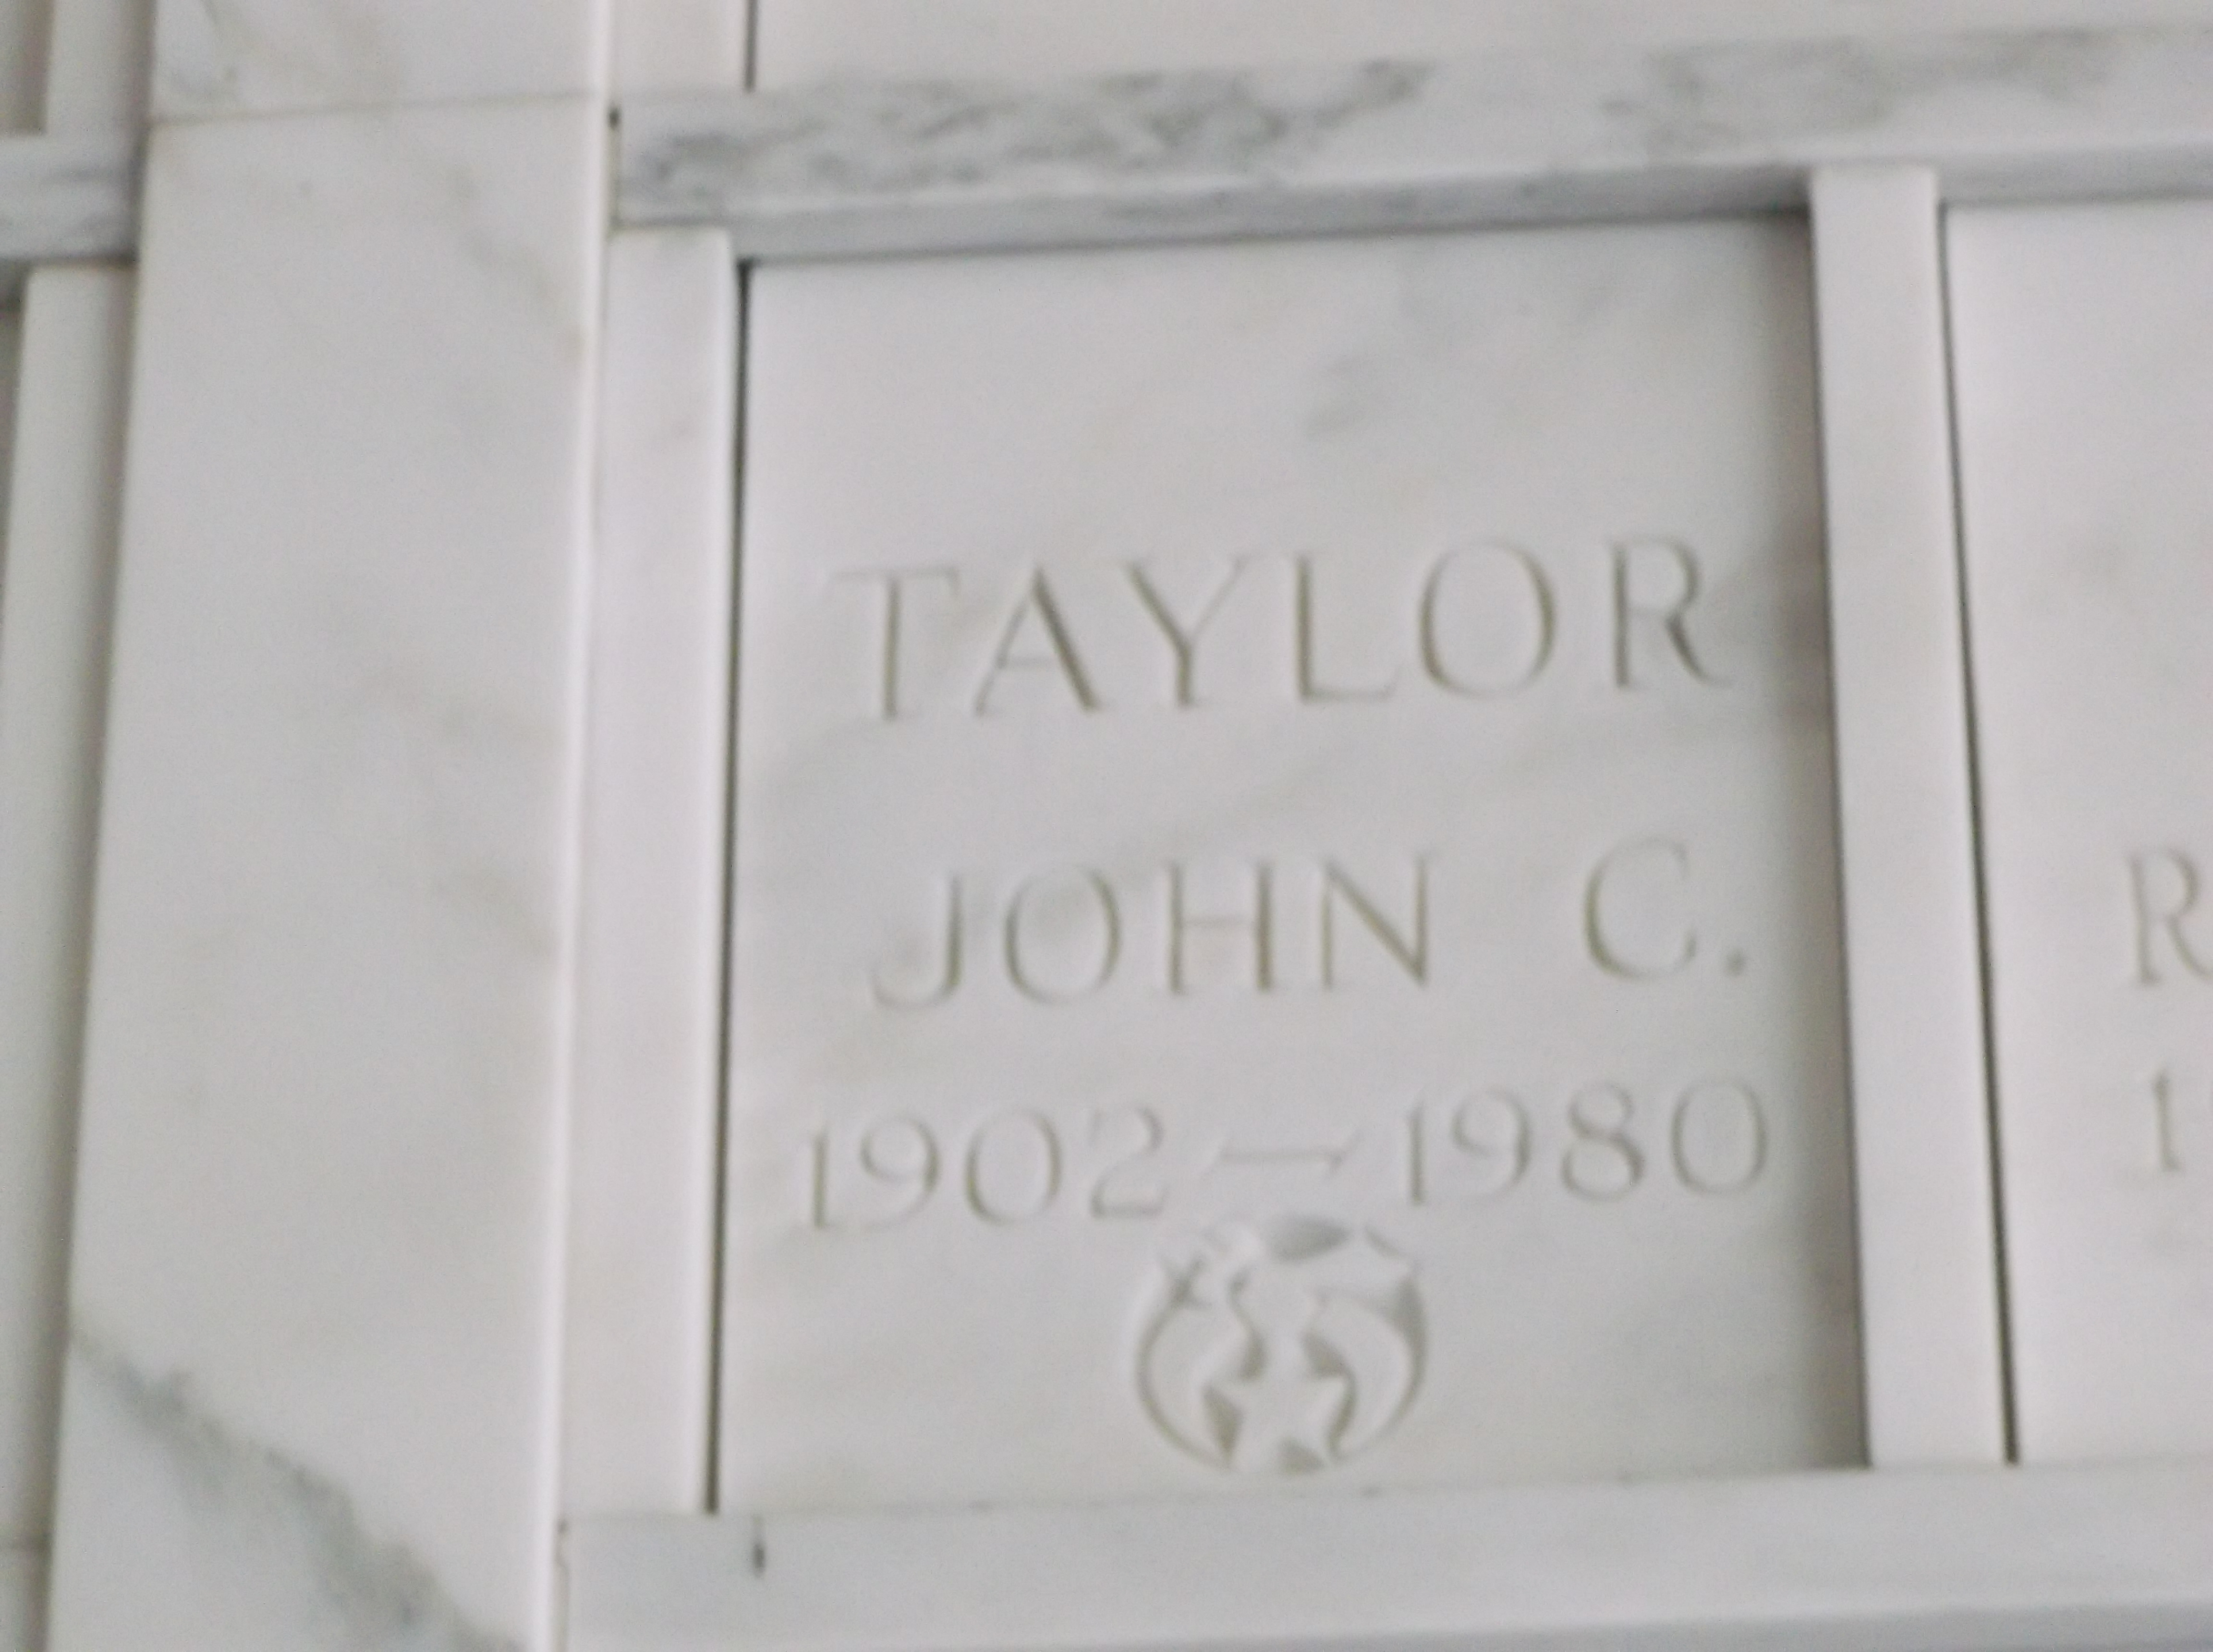 John C Taylor